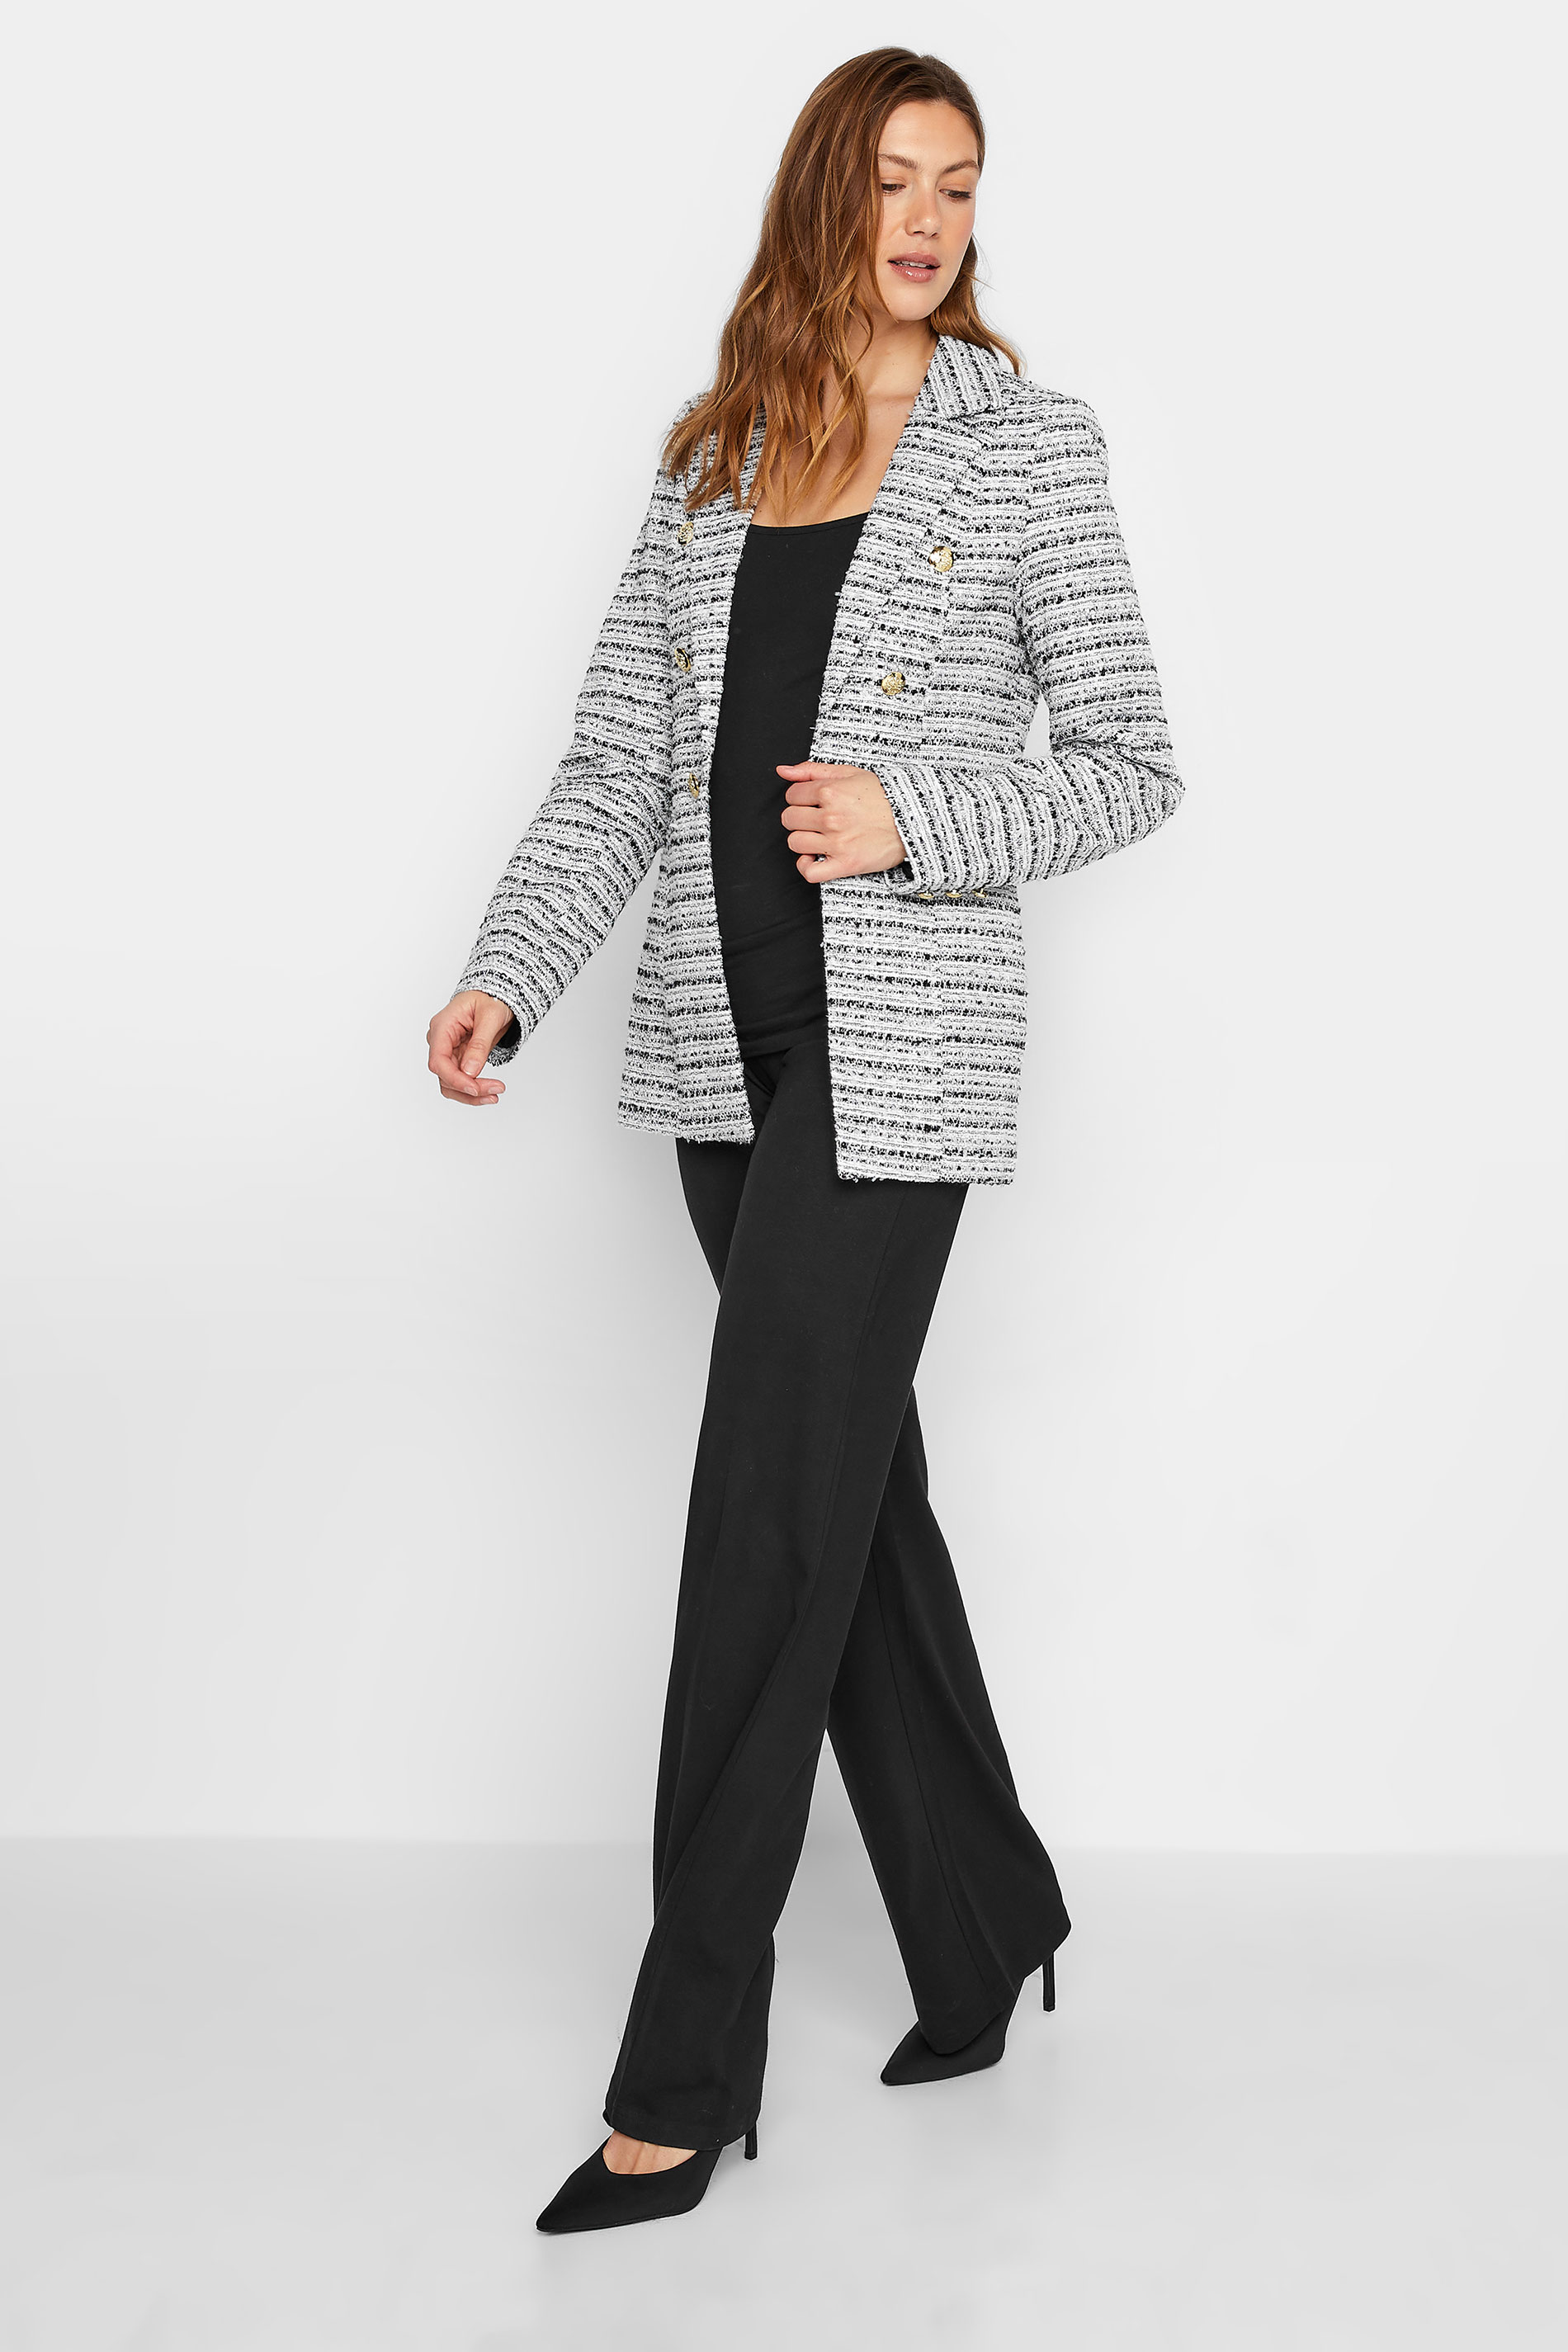 LTS Tall Women's Black & White Boucle Blazer | Long Tall Sally 2